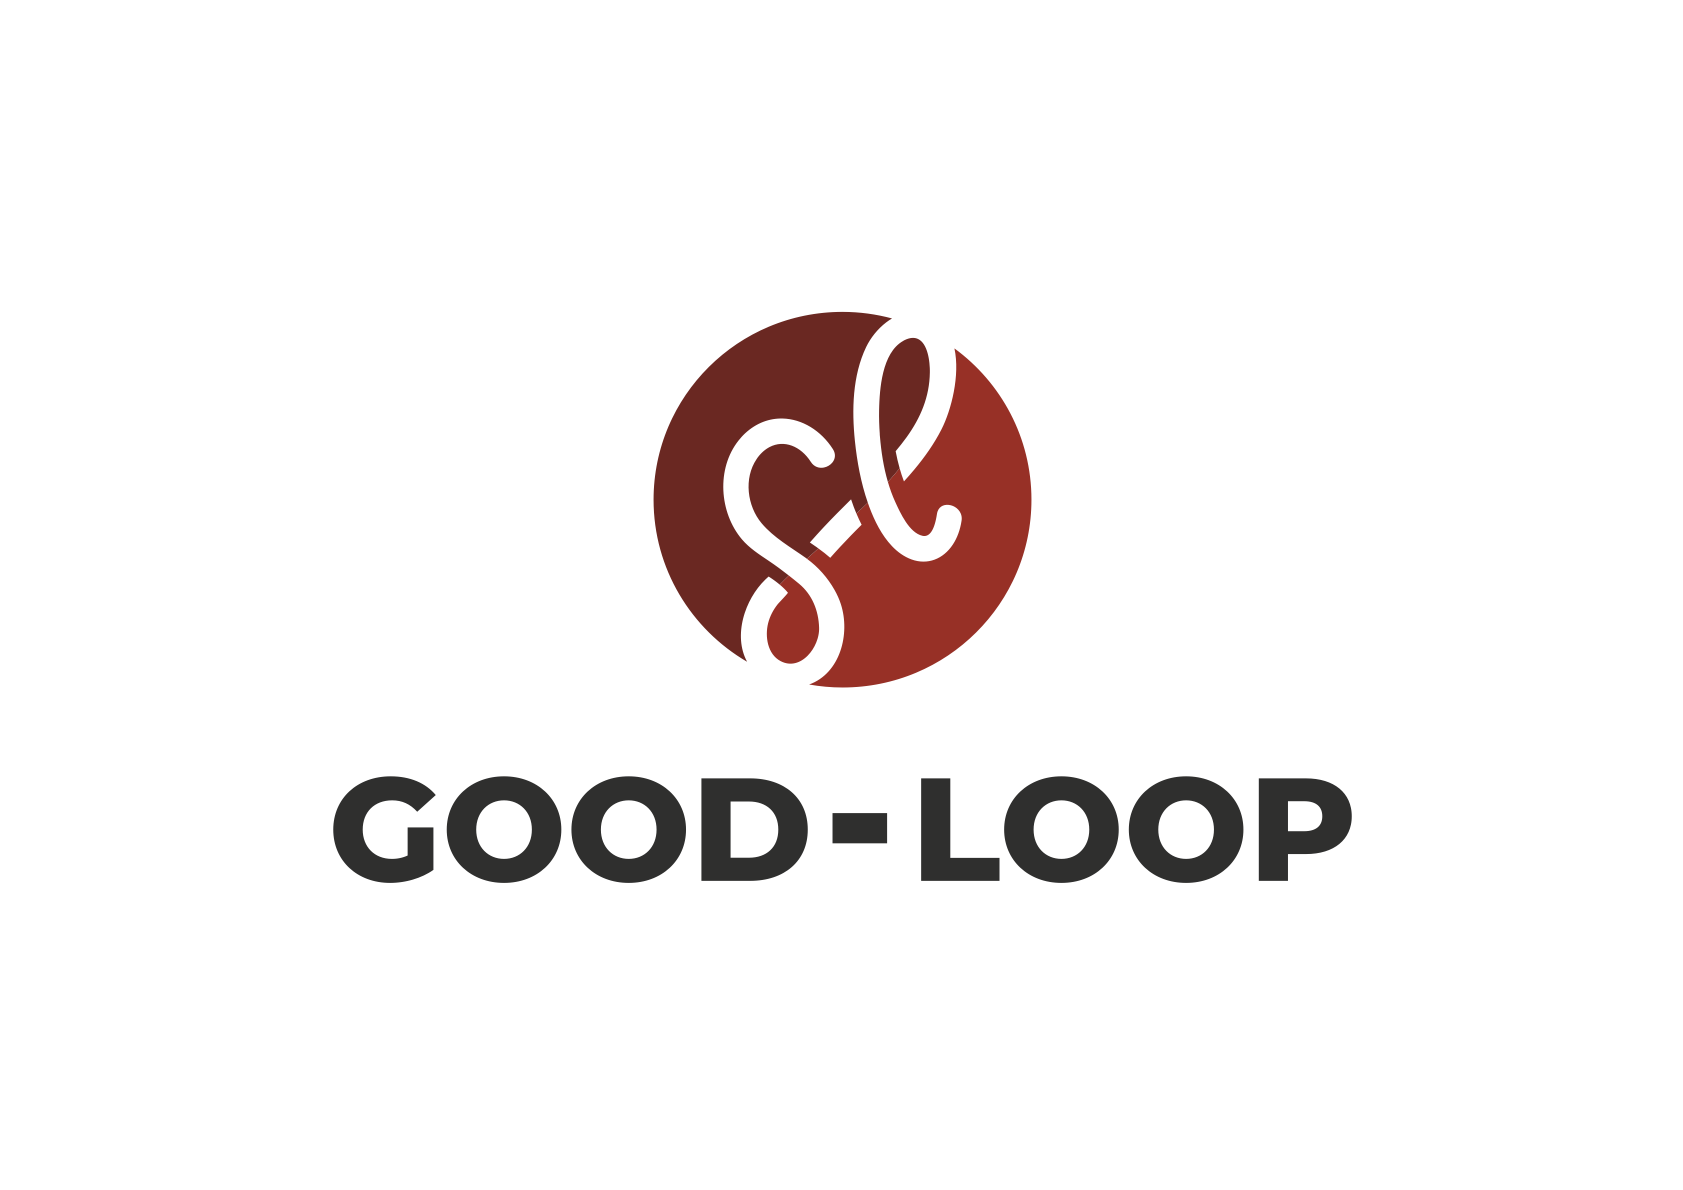 GoodLoopLogos_Good-Loop_PrimaryLogo_Colour (1) copy.png